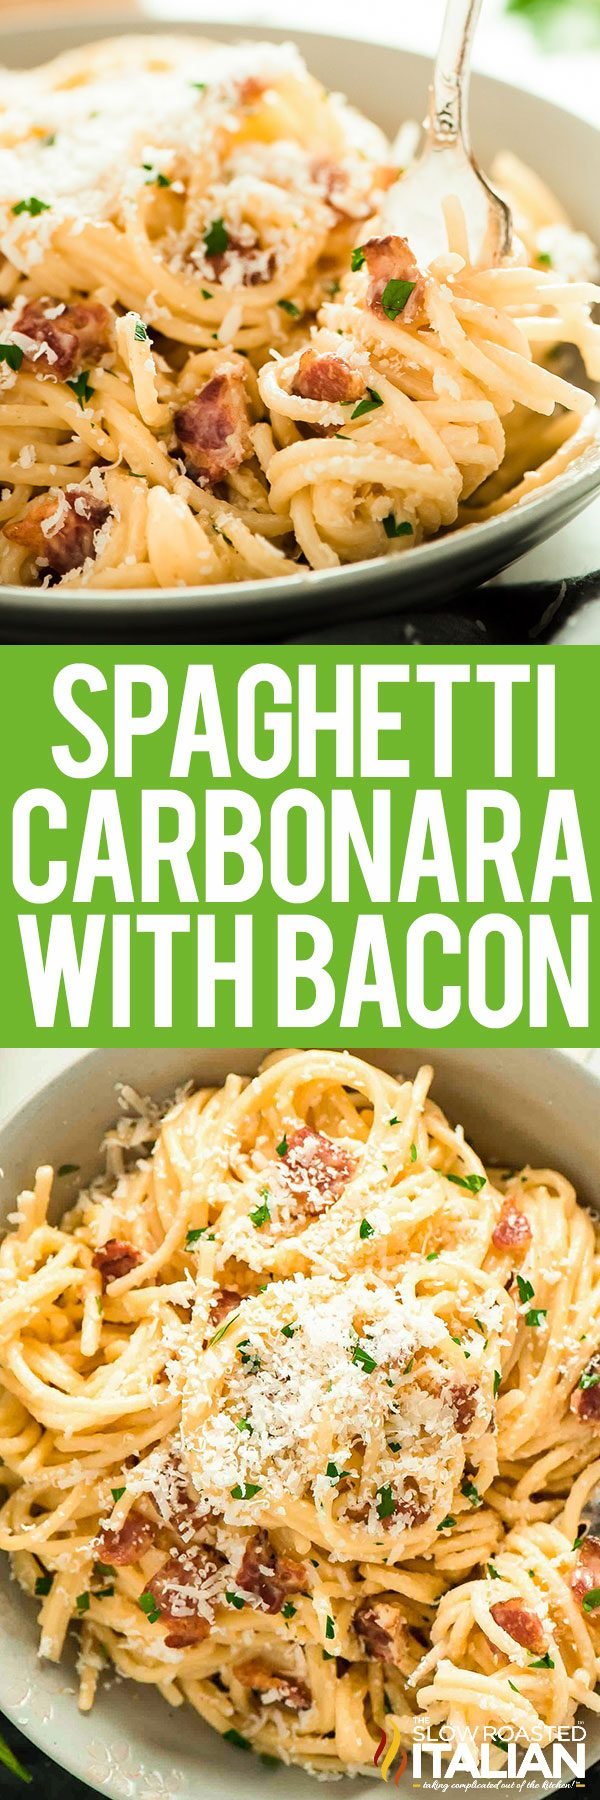 spaghetti-carbonara-pin-3641622